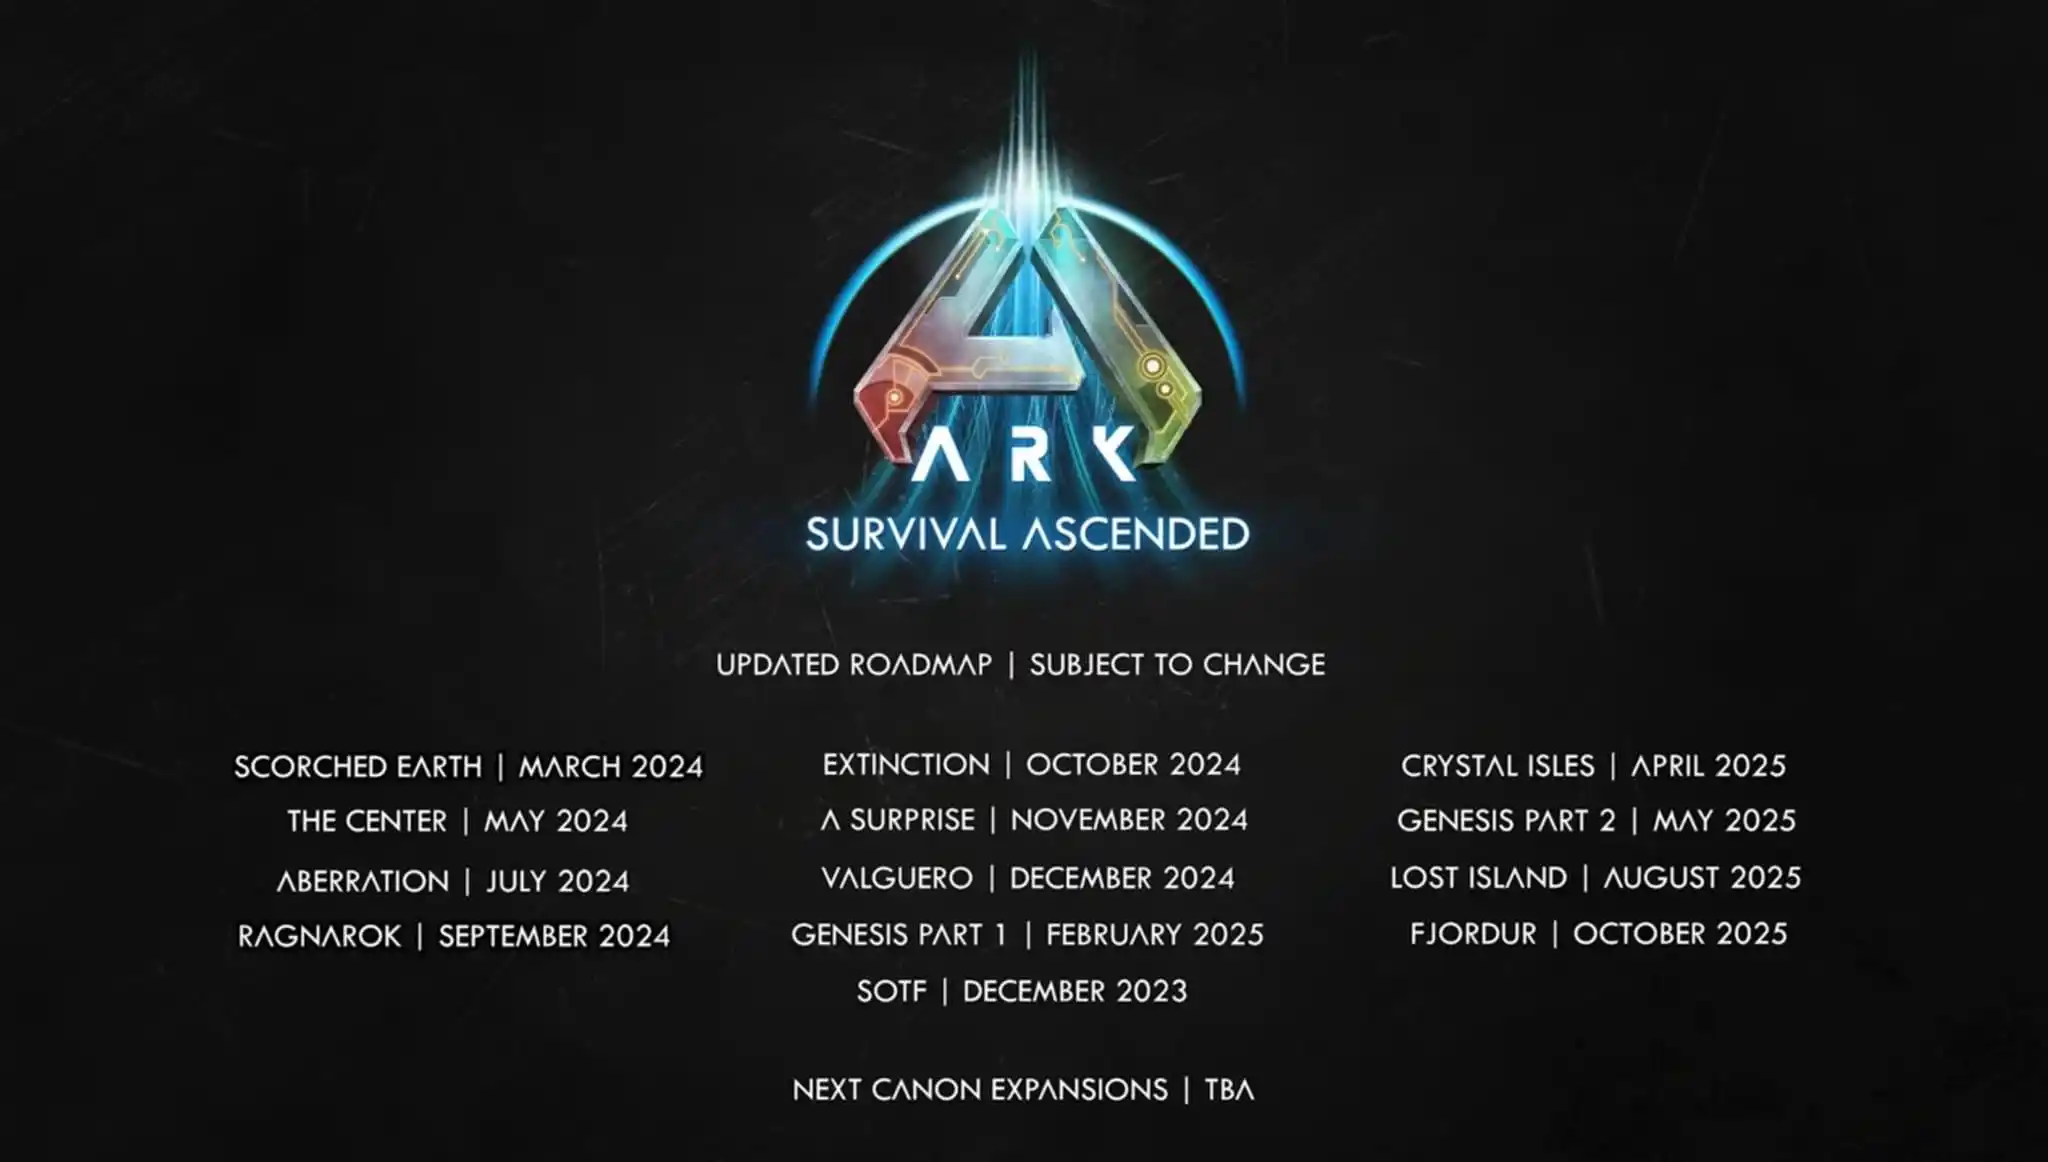 Ark Survival Ascended announces full roadmap, paid DLC, and 'surprises